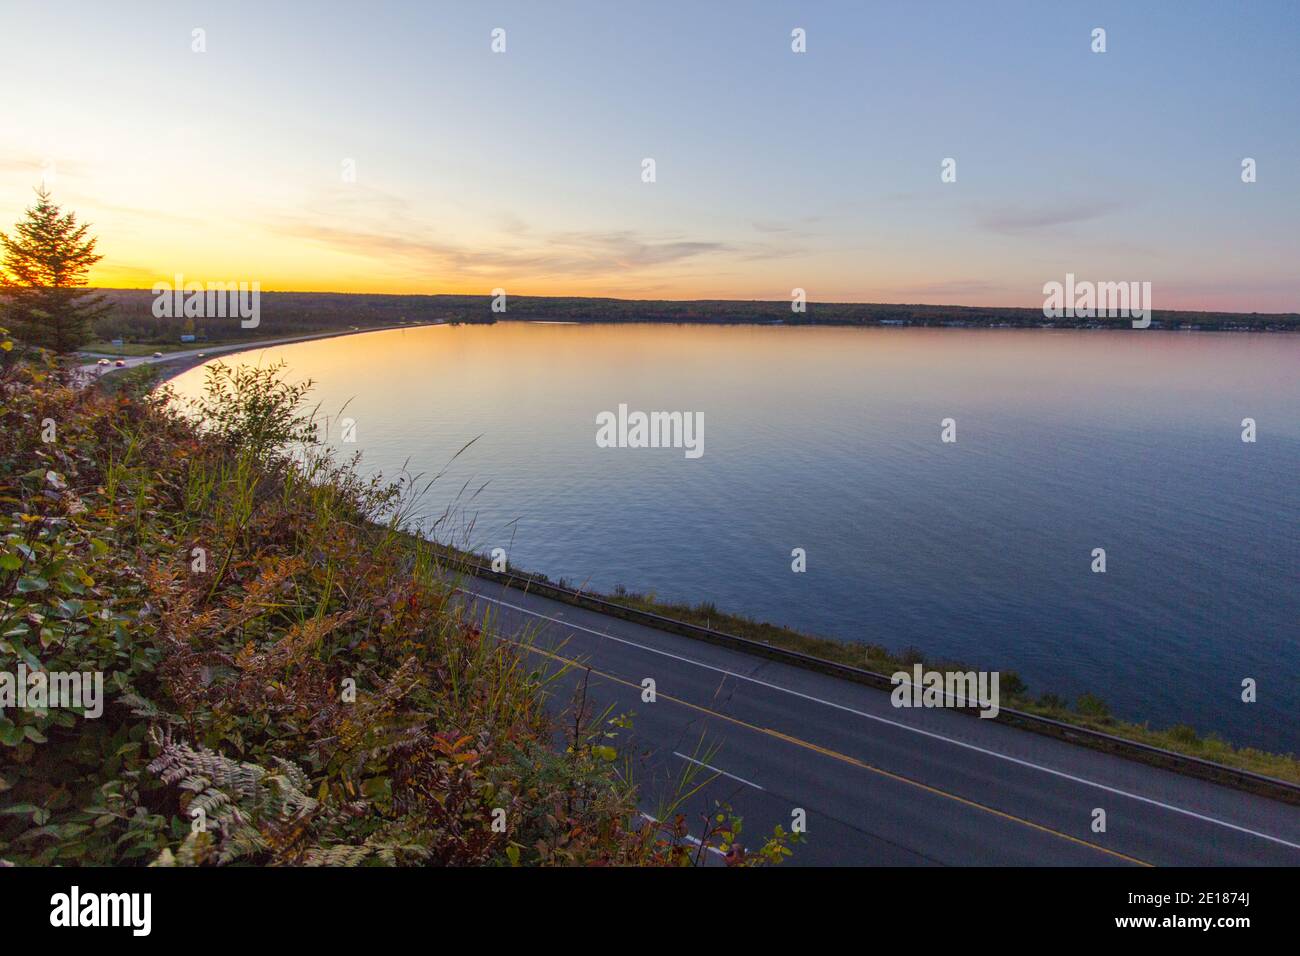 Michigan Scenic Drive. Coastal highway along the Keweenaw Bay of Lake Superior at sunset in the Upper Peninsula of Michigan. Stock Photo